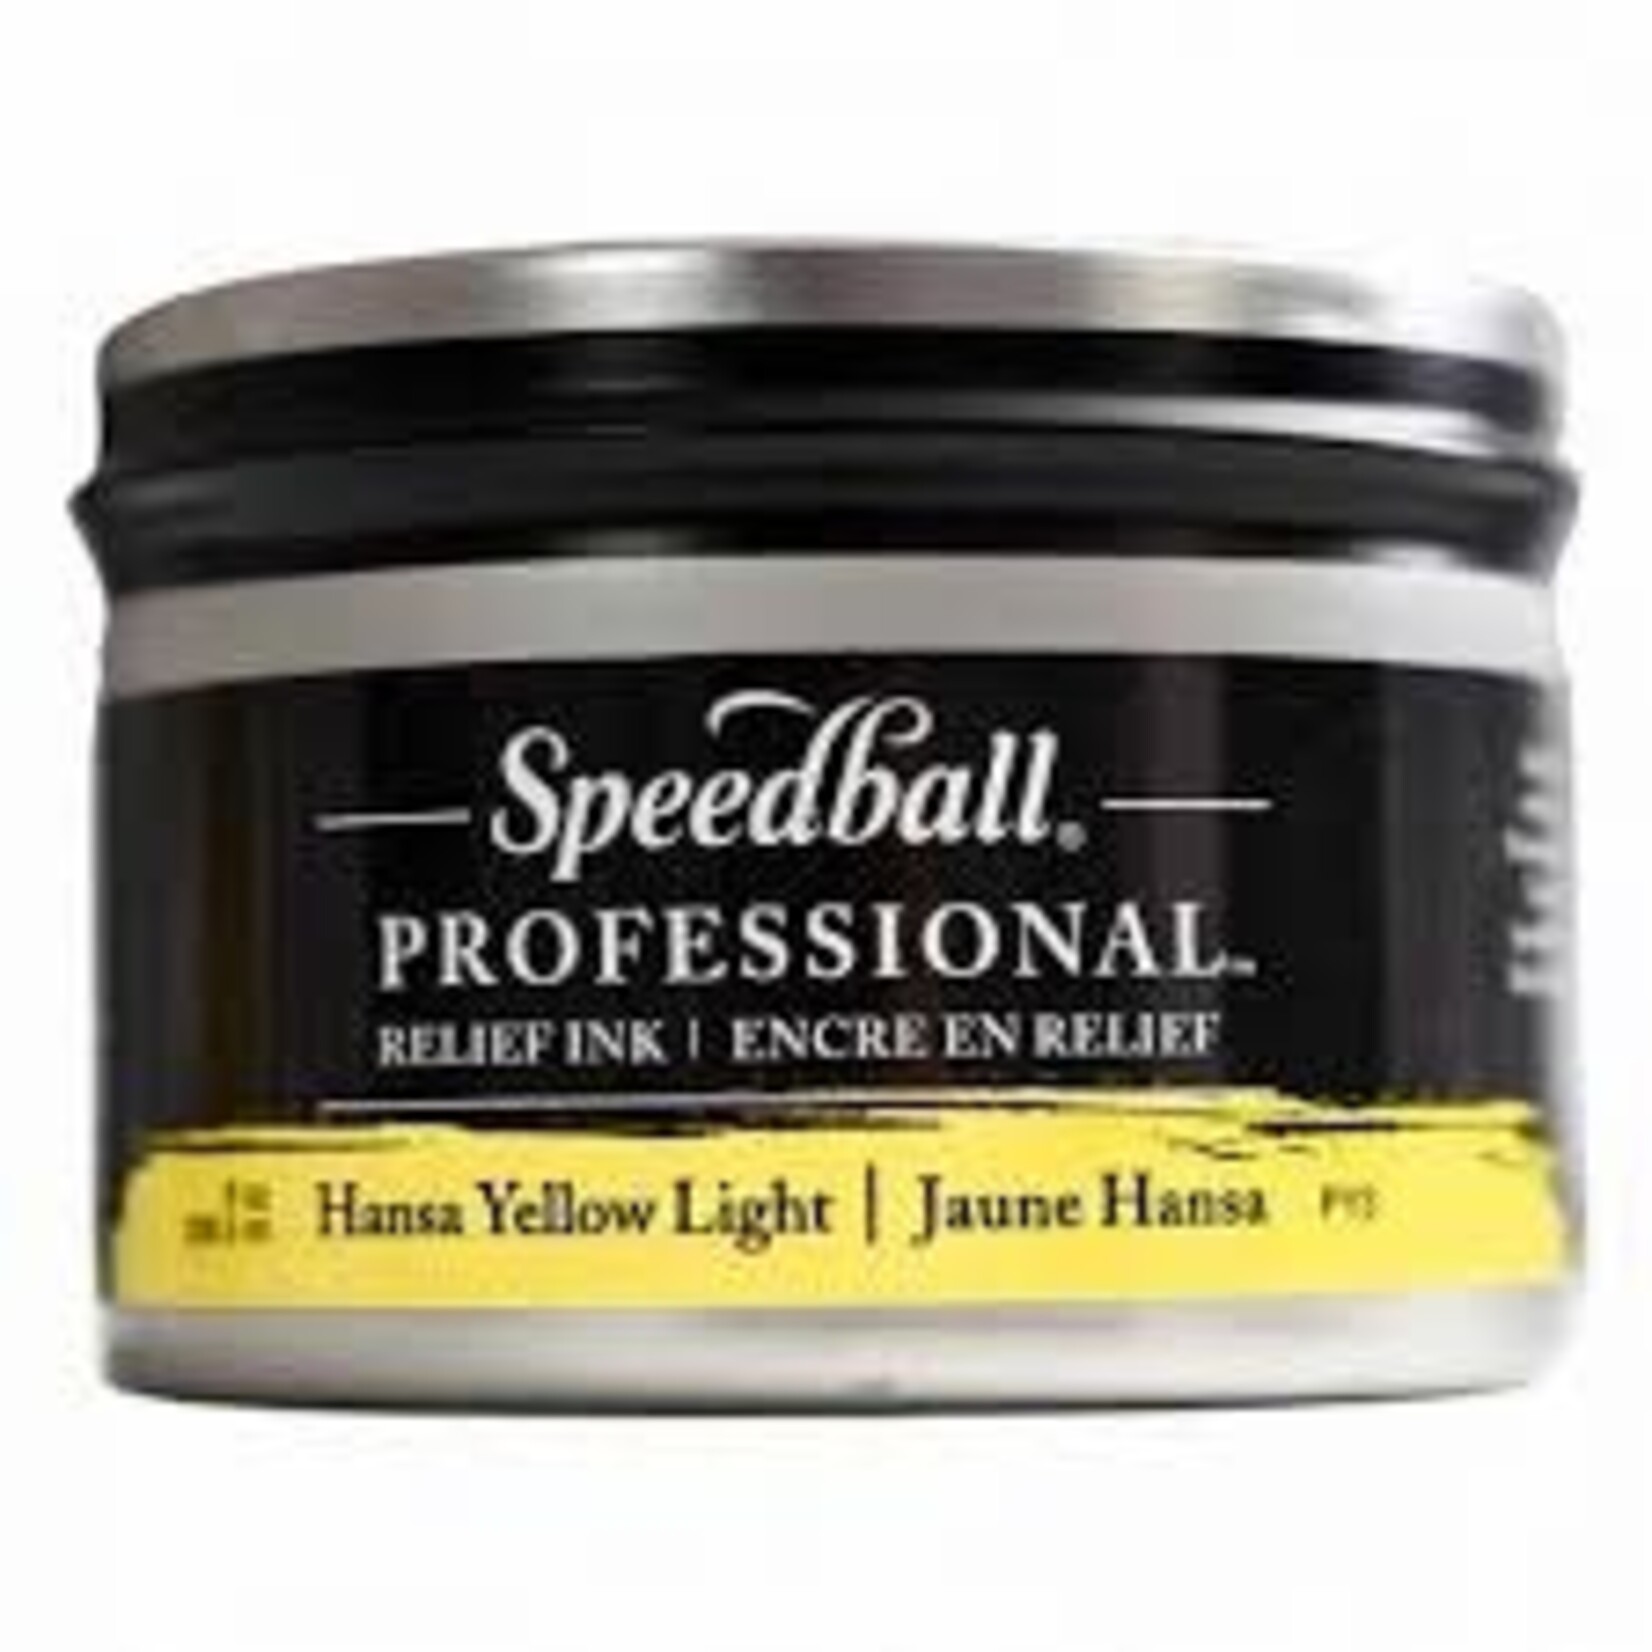 Speedball 8Oz Professional Relief Ink Hansa Yellow Light